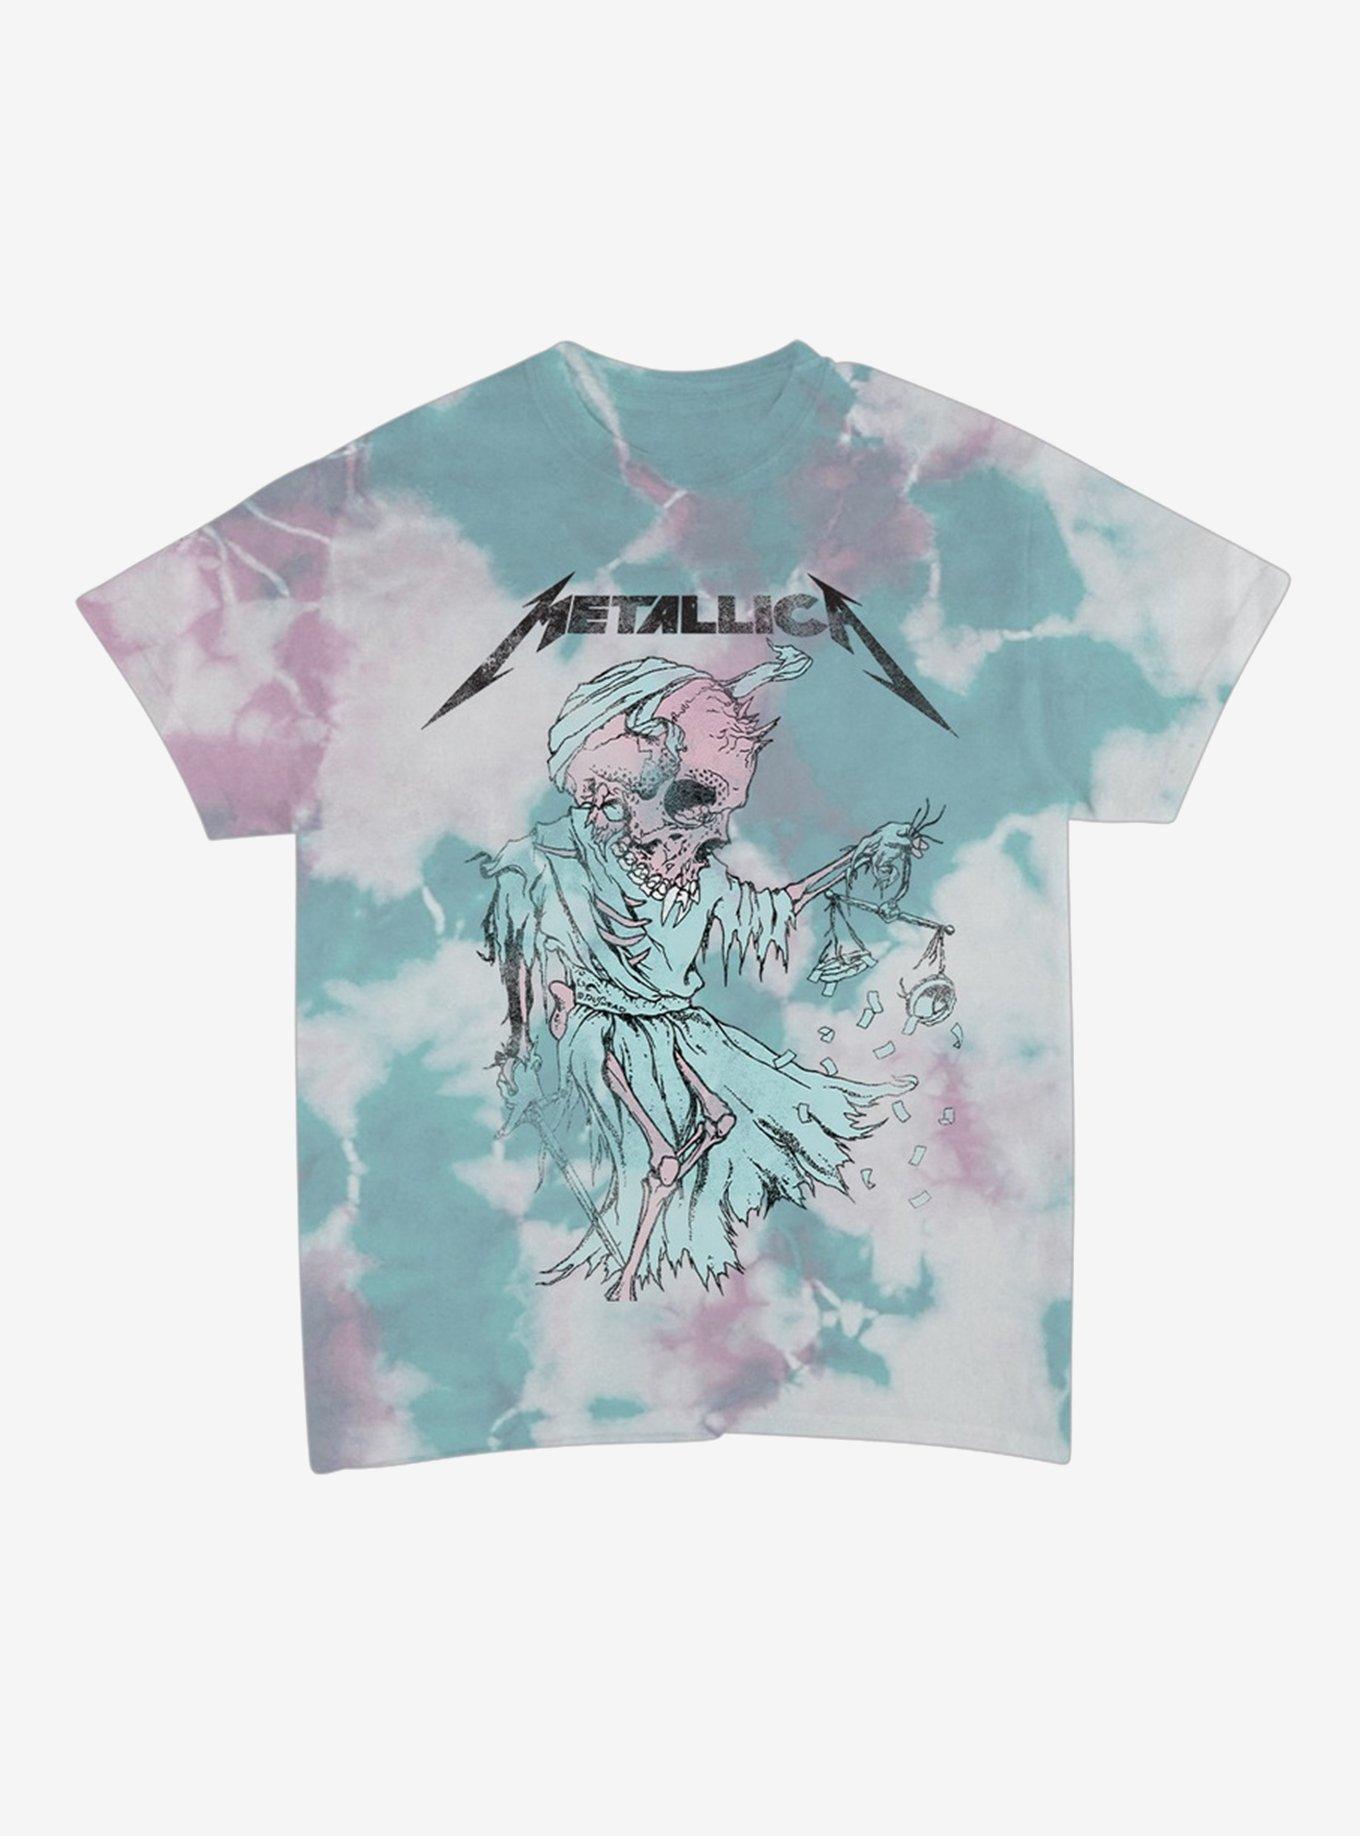 Metallica Justice Skull Pastel Tie-Dye Boyfriend Fit Girls T-Shirt, MULTI, hi-res